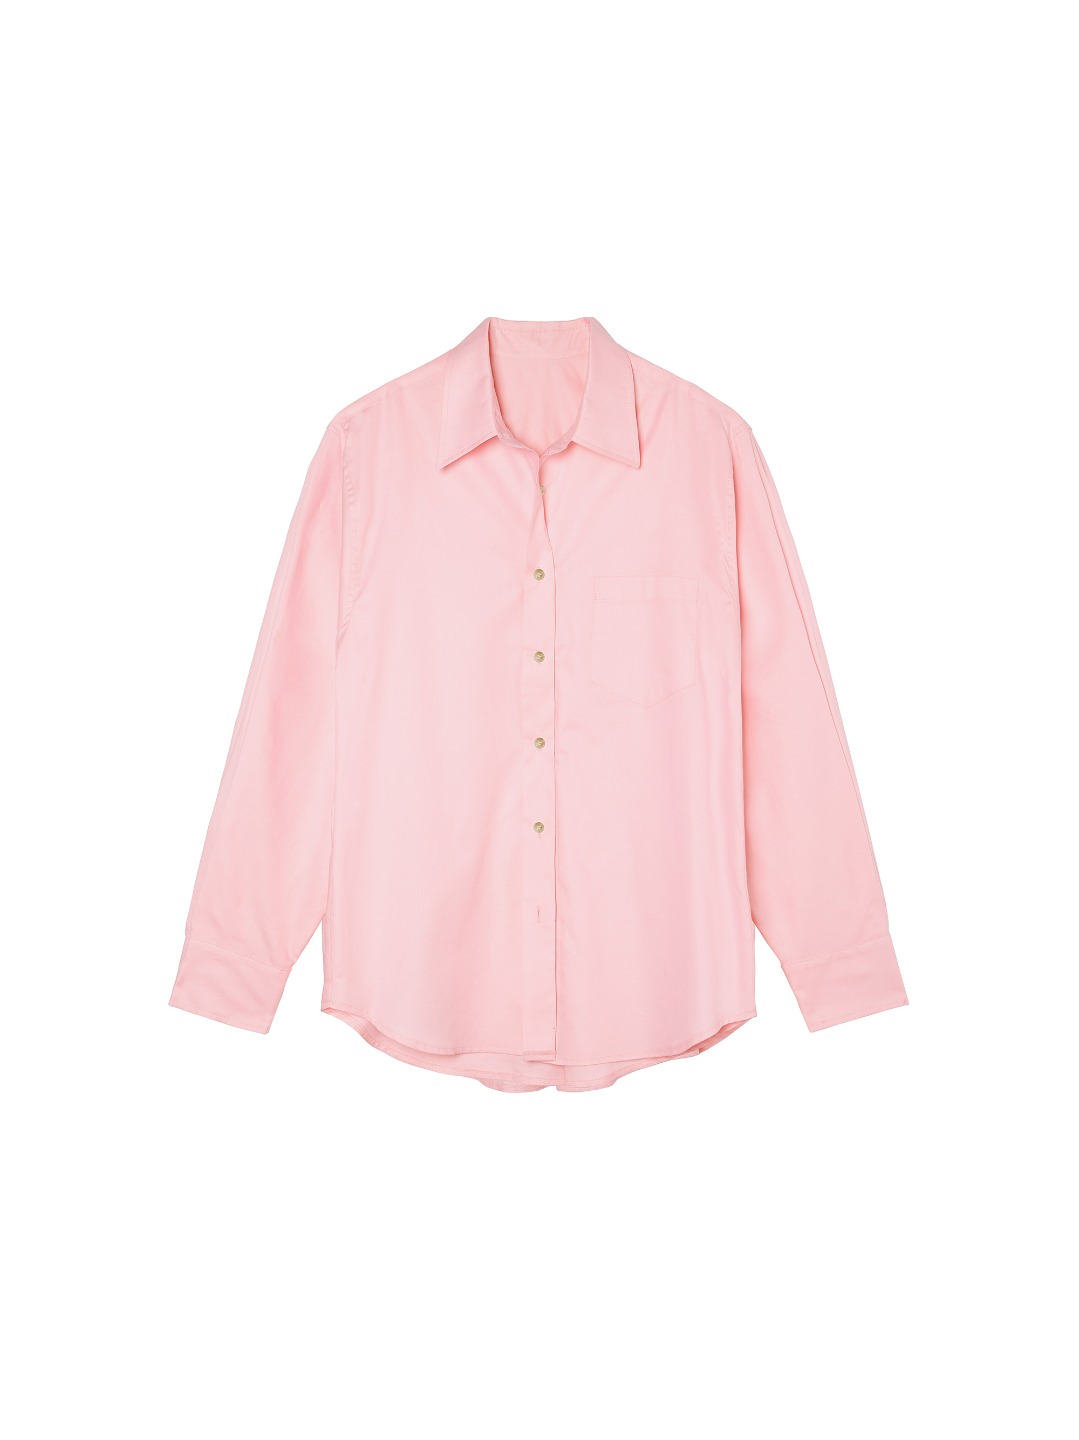 286. Button-down Oxford Shirt / 버튼-다운 옥스포드 셔츠